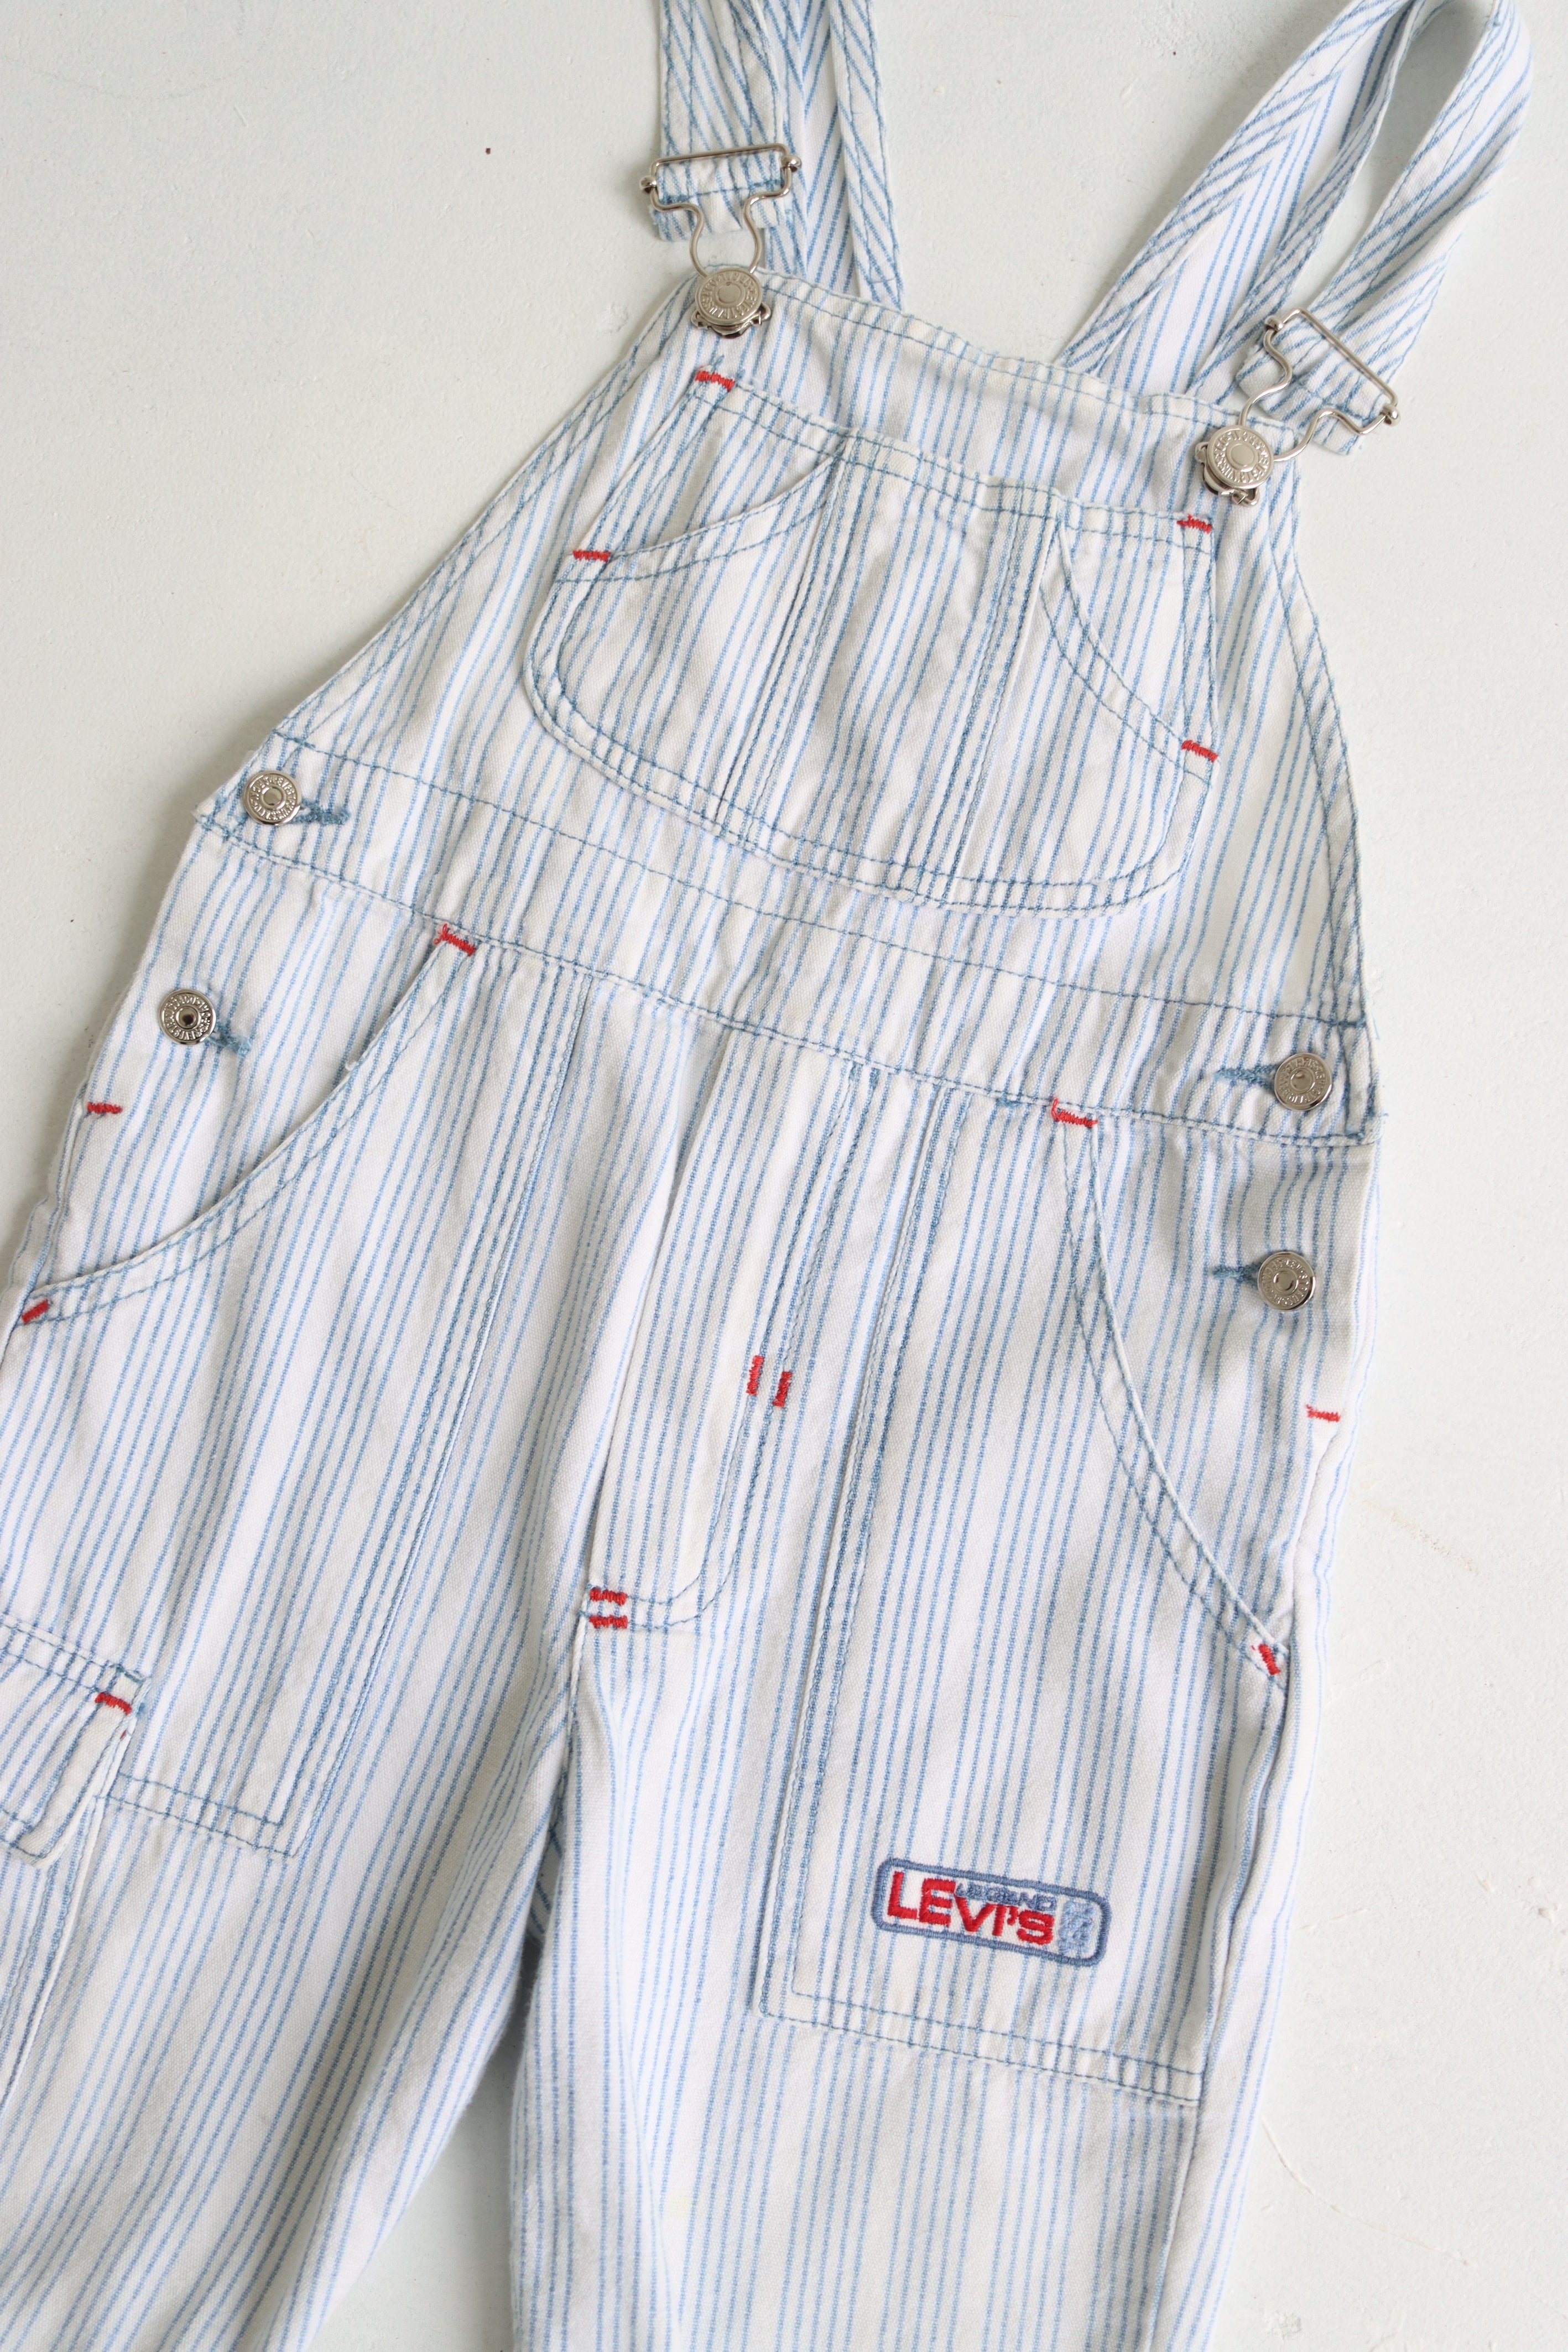 Vintage striped Levi's overalls  - Size 12-18 months